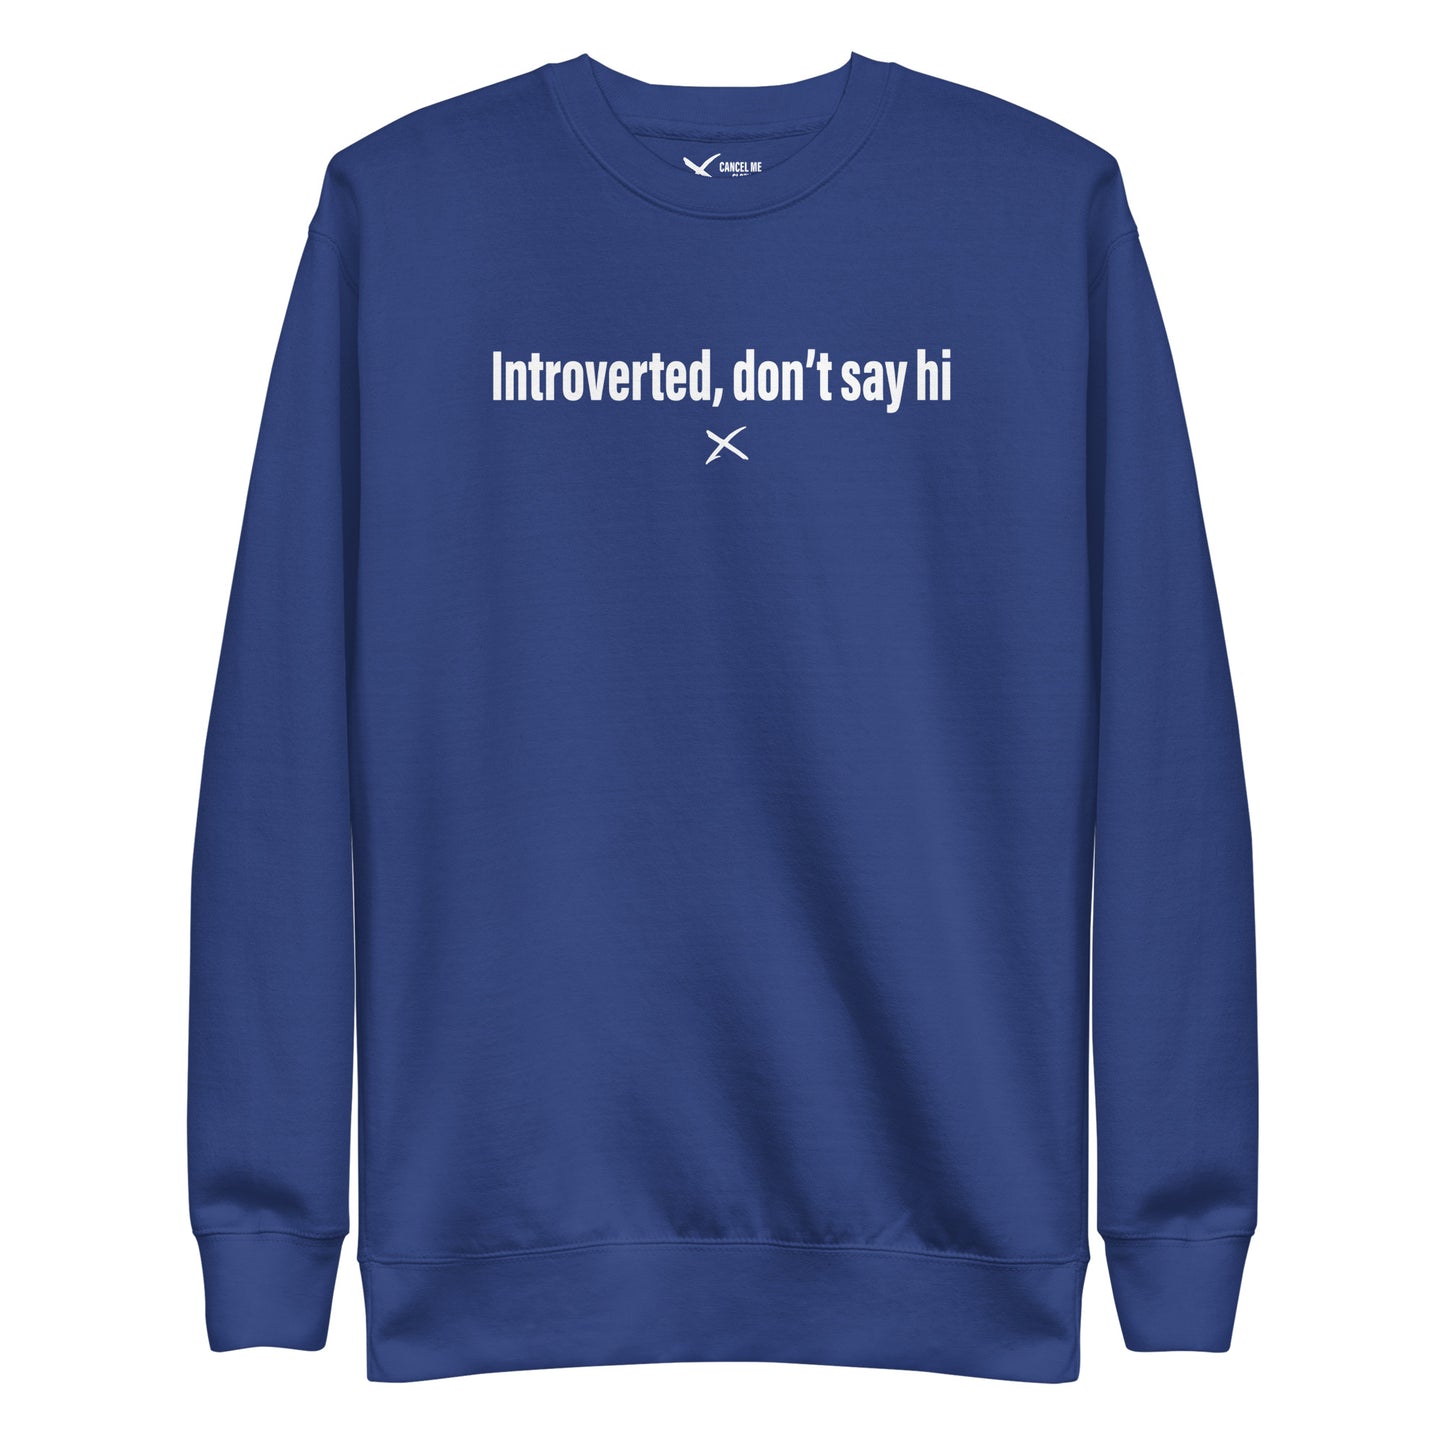 Introverted, don't say hi - Sweatshirt